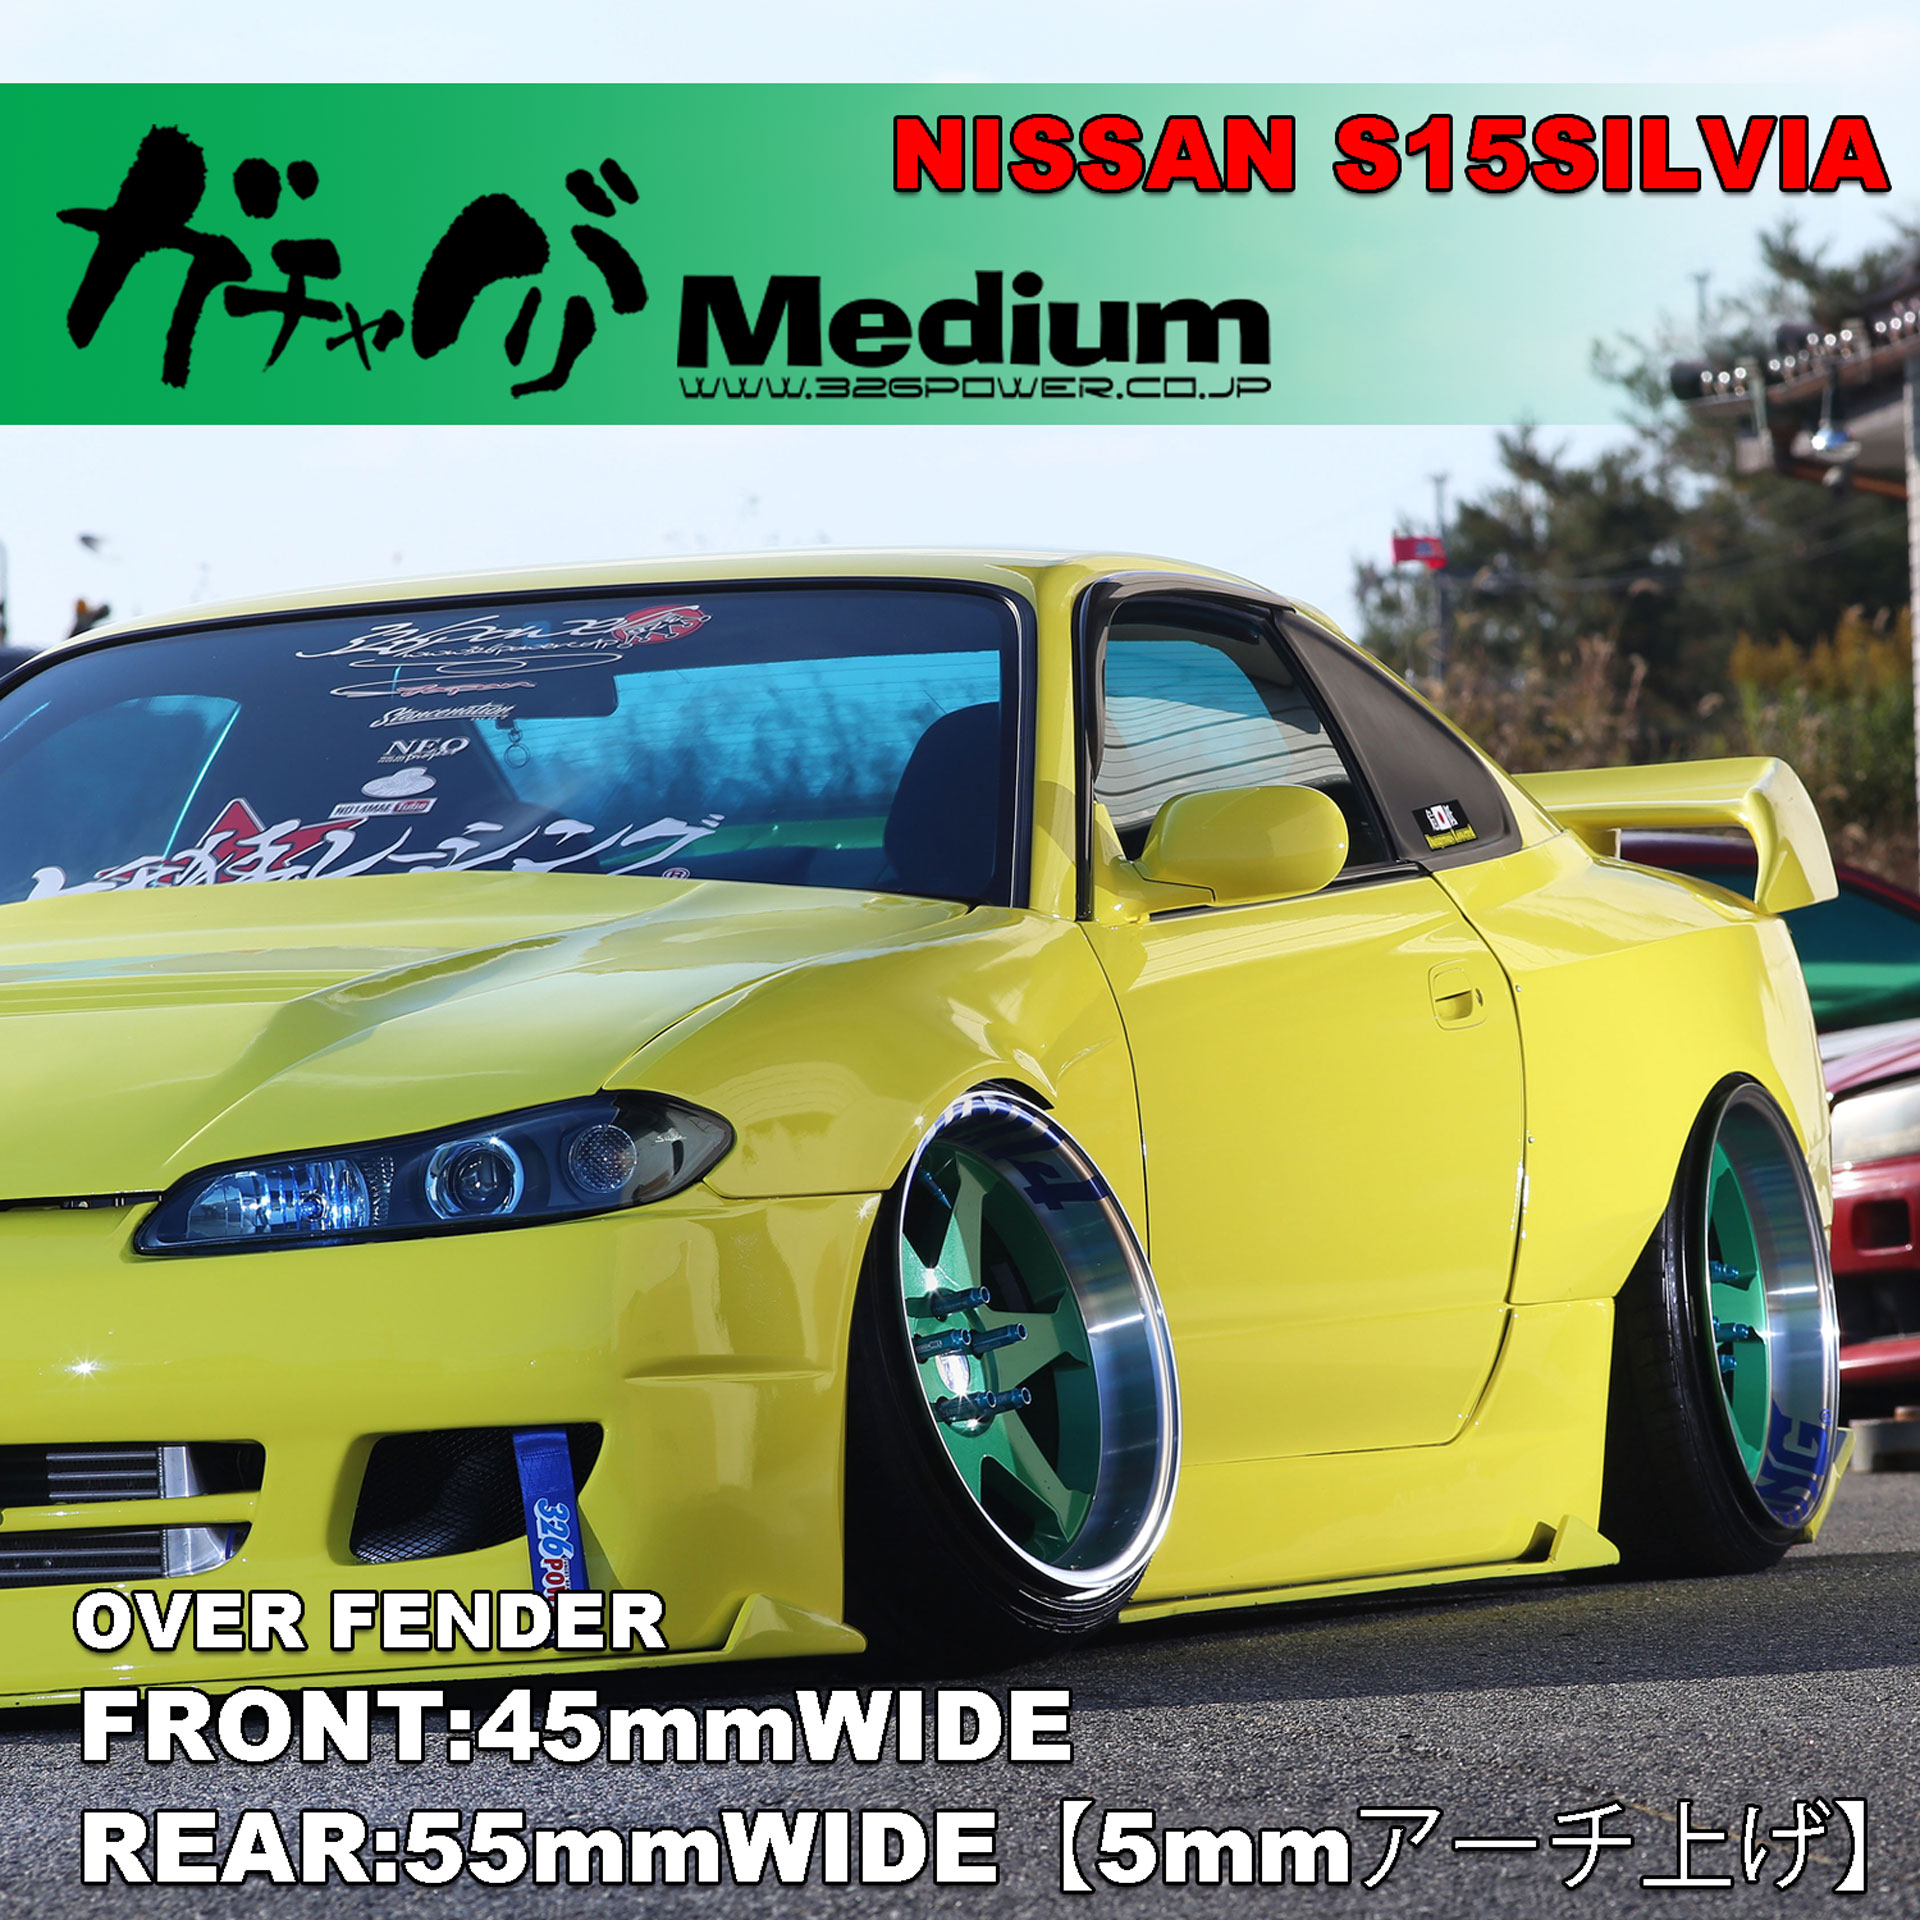 326 Power - Gachyabari Medium1 Over Fenders - S15 Silvia